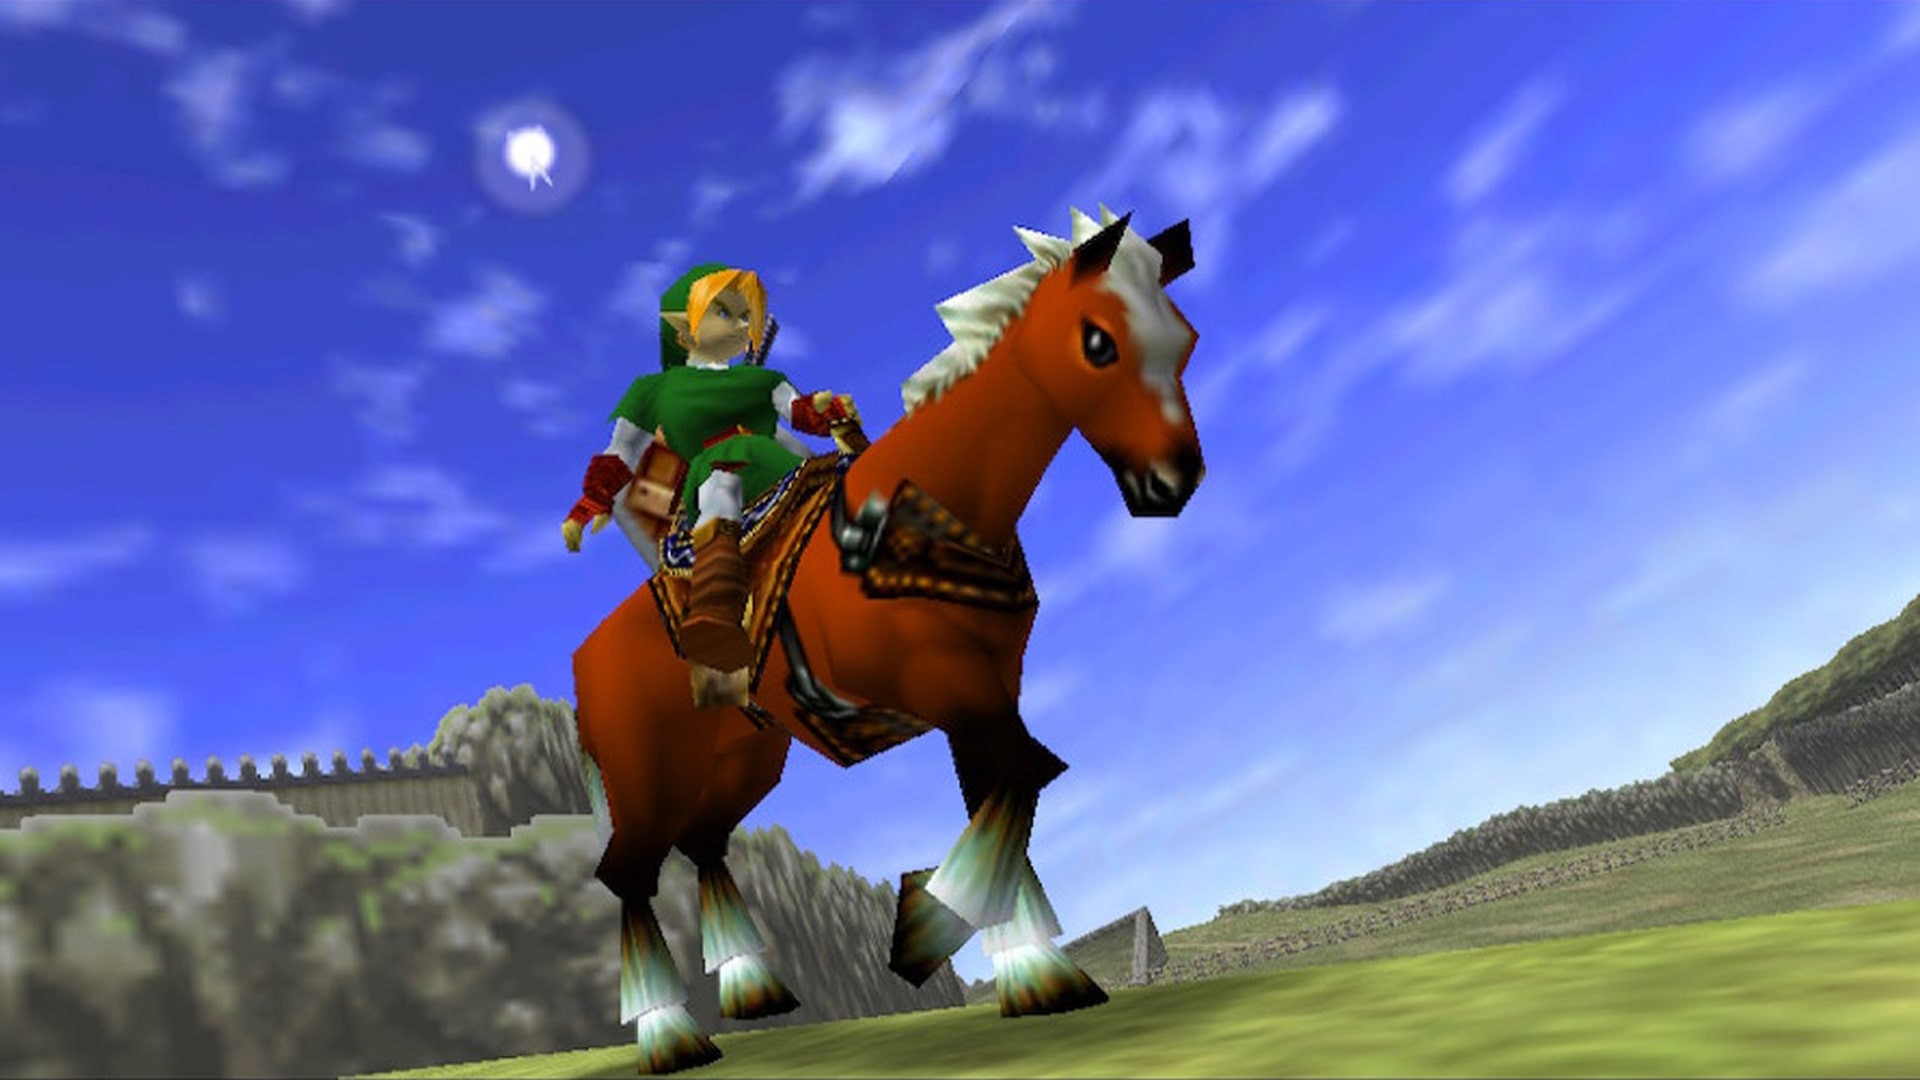 Link Riding Epona in The Legend of Zelda: Ocarina of Time